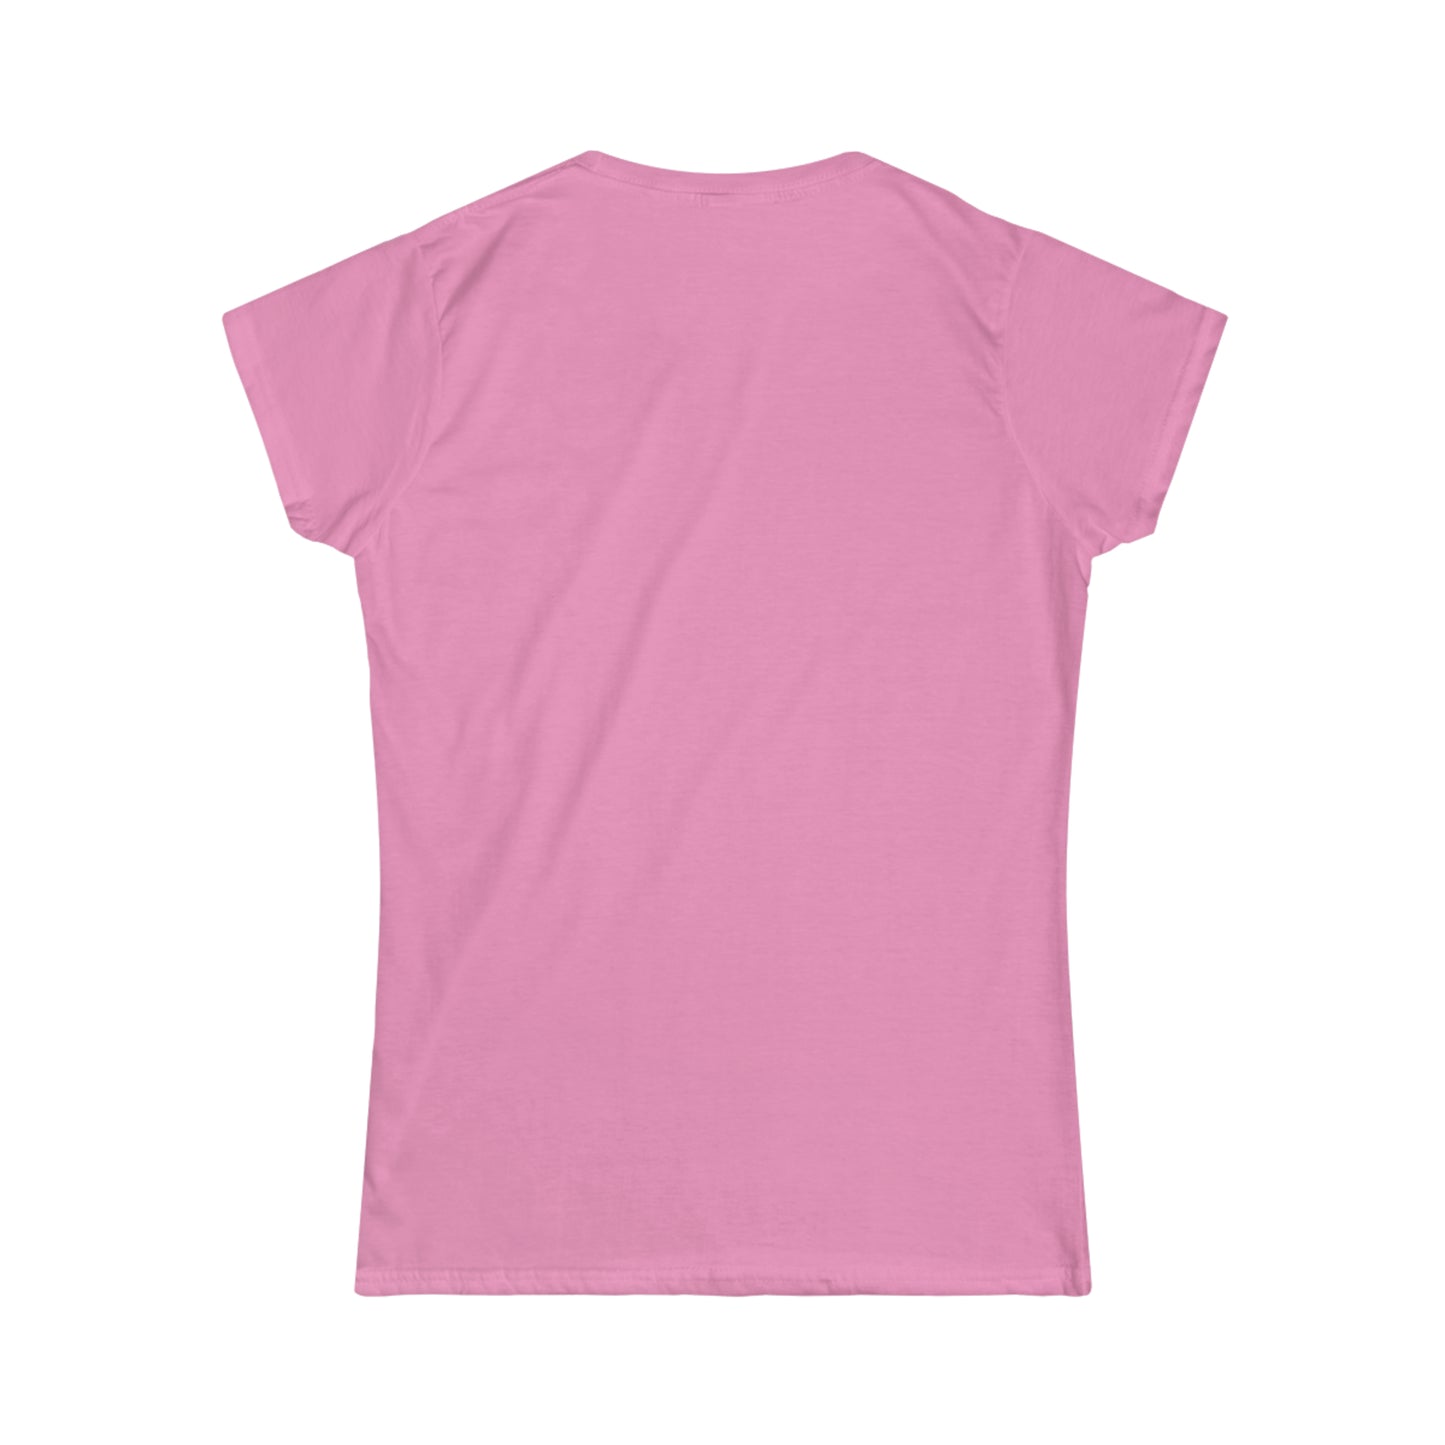 Women's Corgi Dog Mom Soft Style T-Shirt